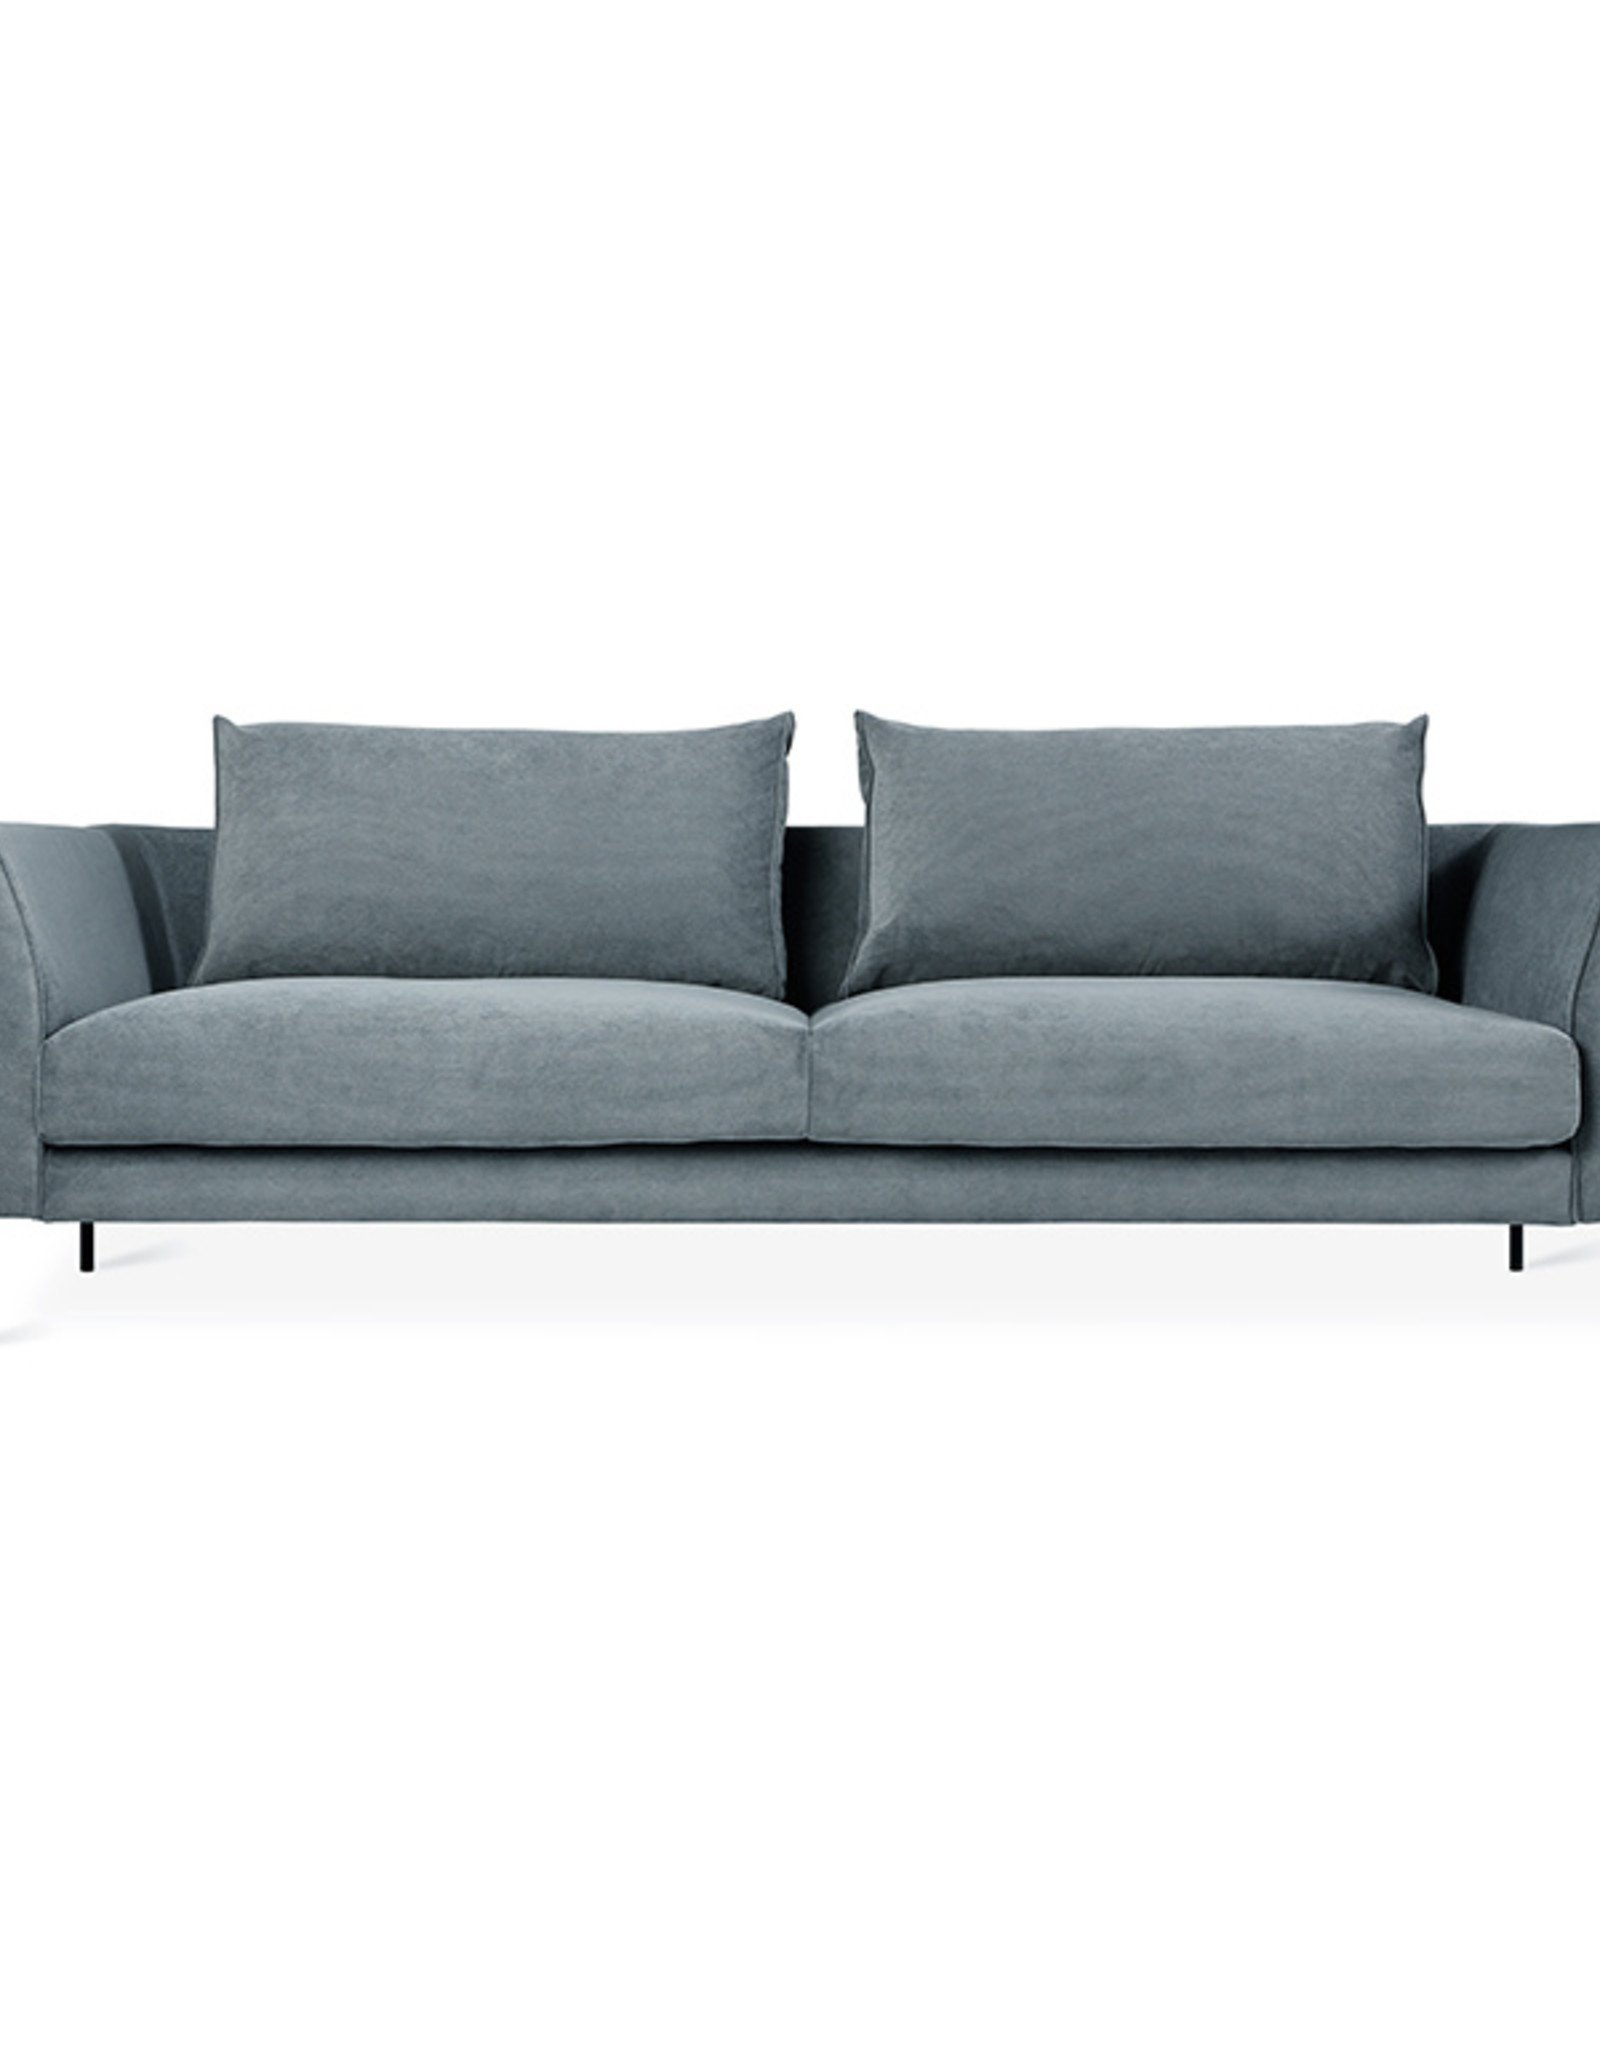 Gus* Modern Renfrew Sofa